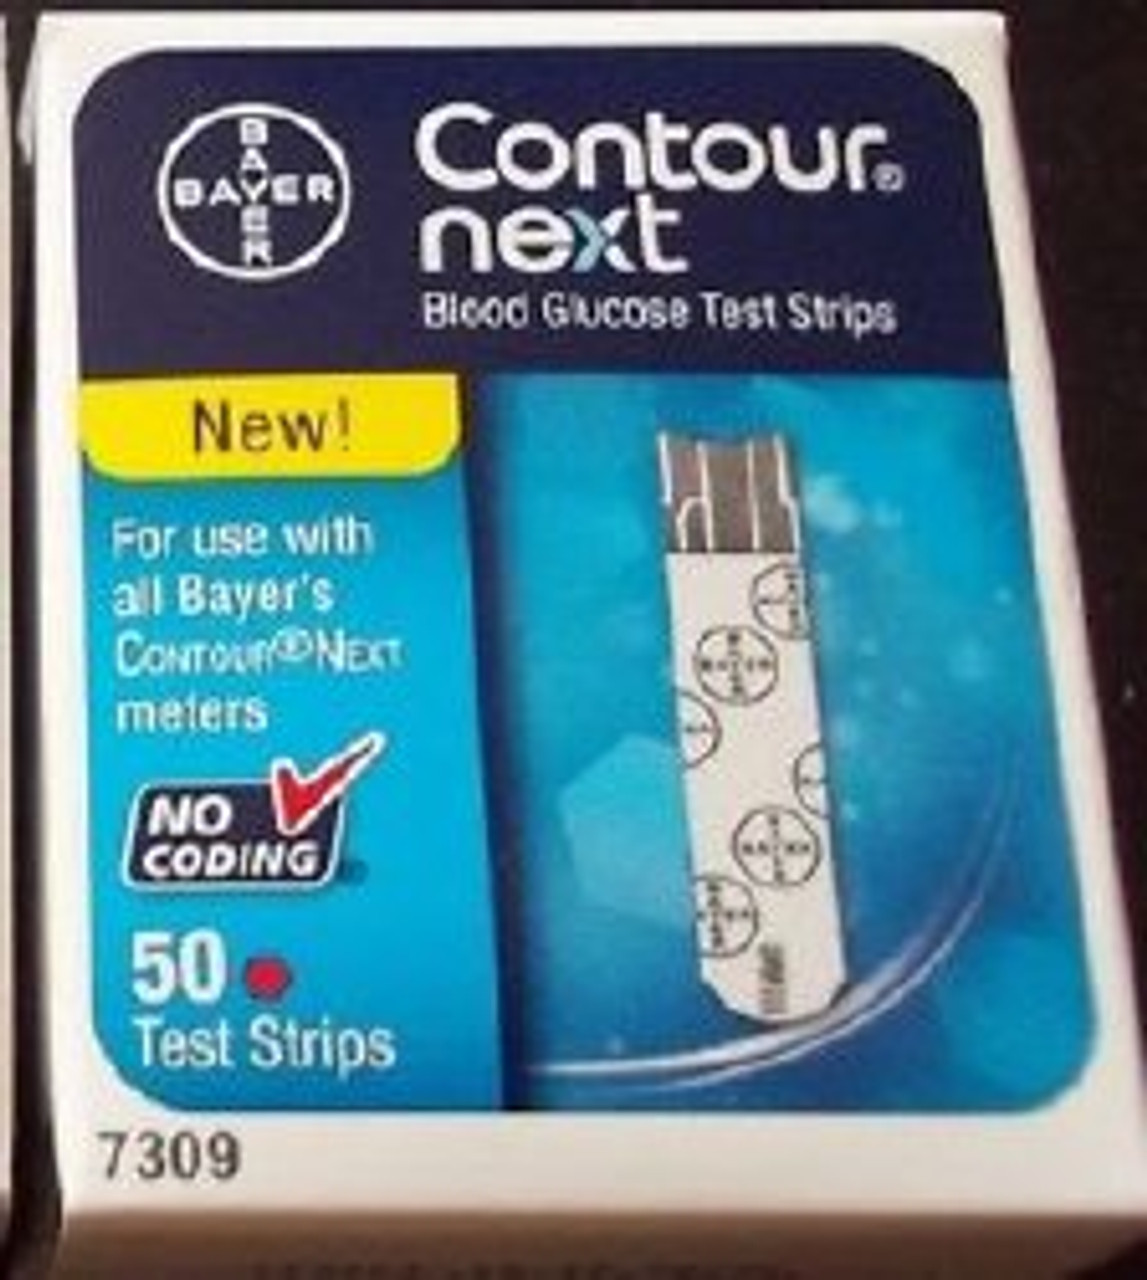 Contour® Next Blood Glucose Test Strips #7309